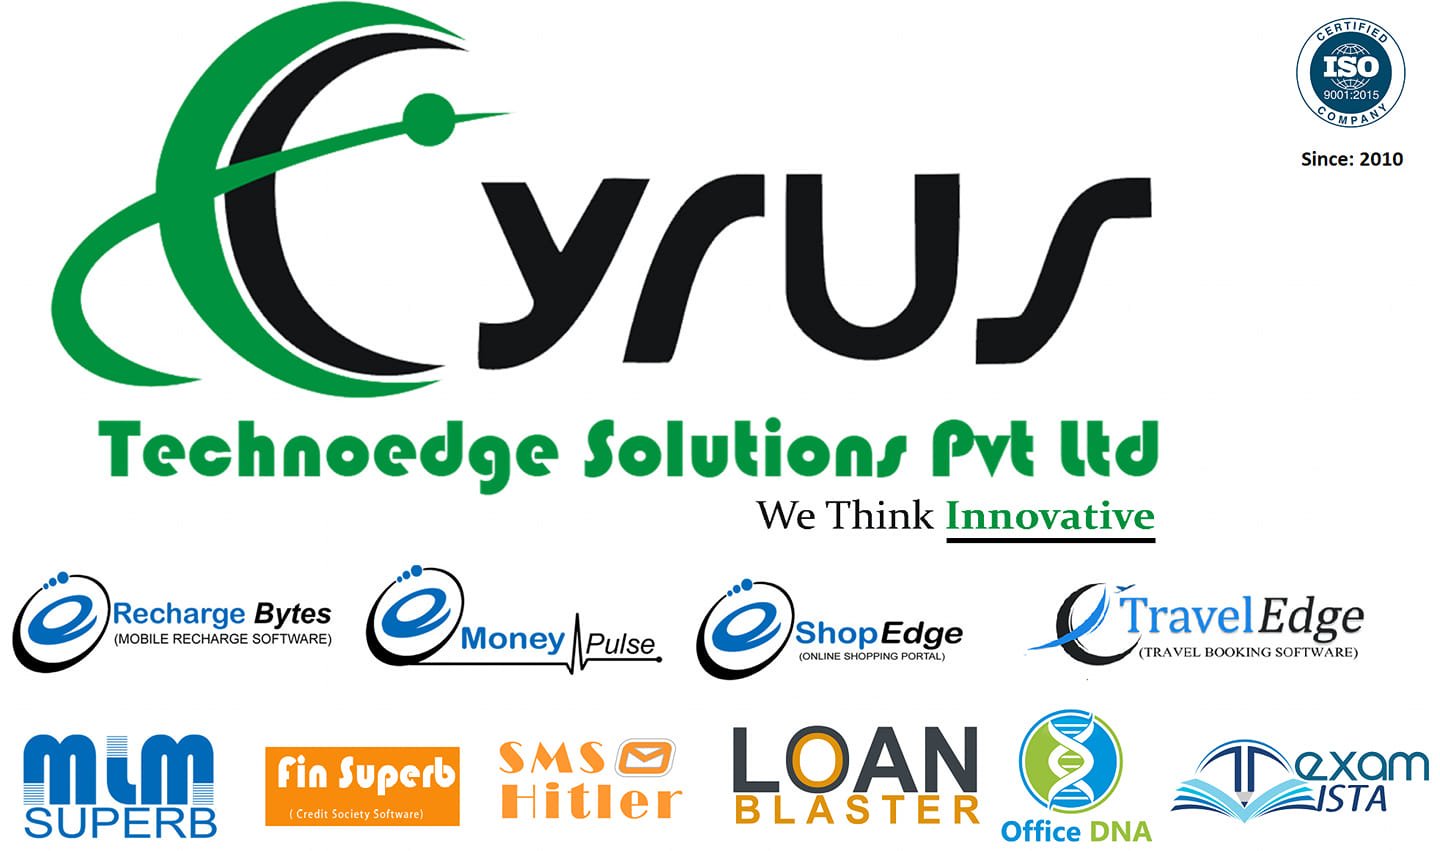 Cyrus Technoedge Solutions Pvt. Ltd. cover